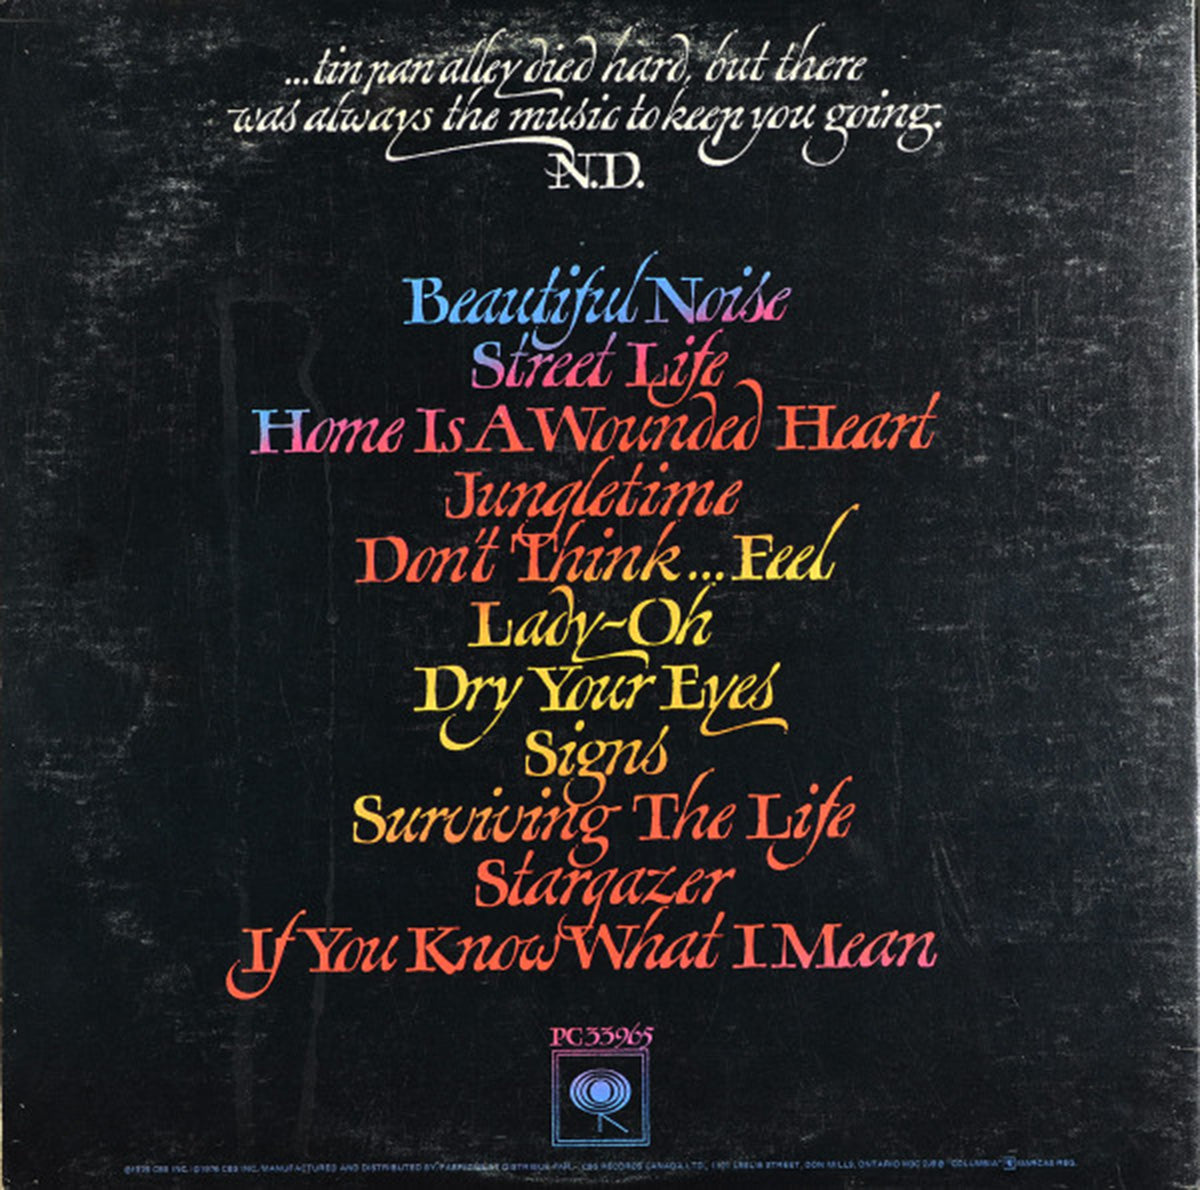 Neil Diamond – Beautiful Noise  -1976